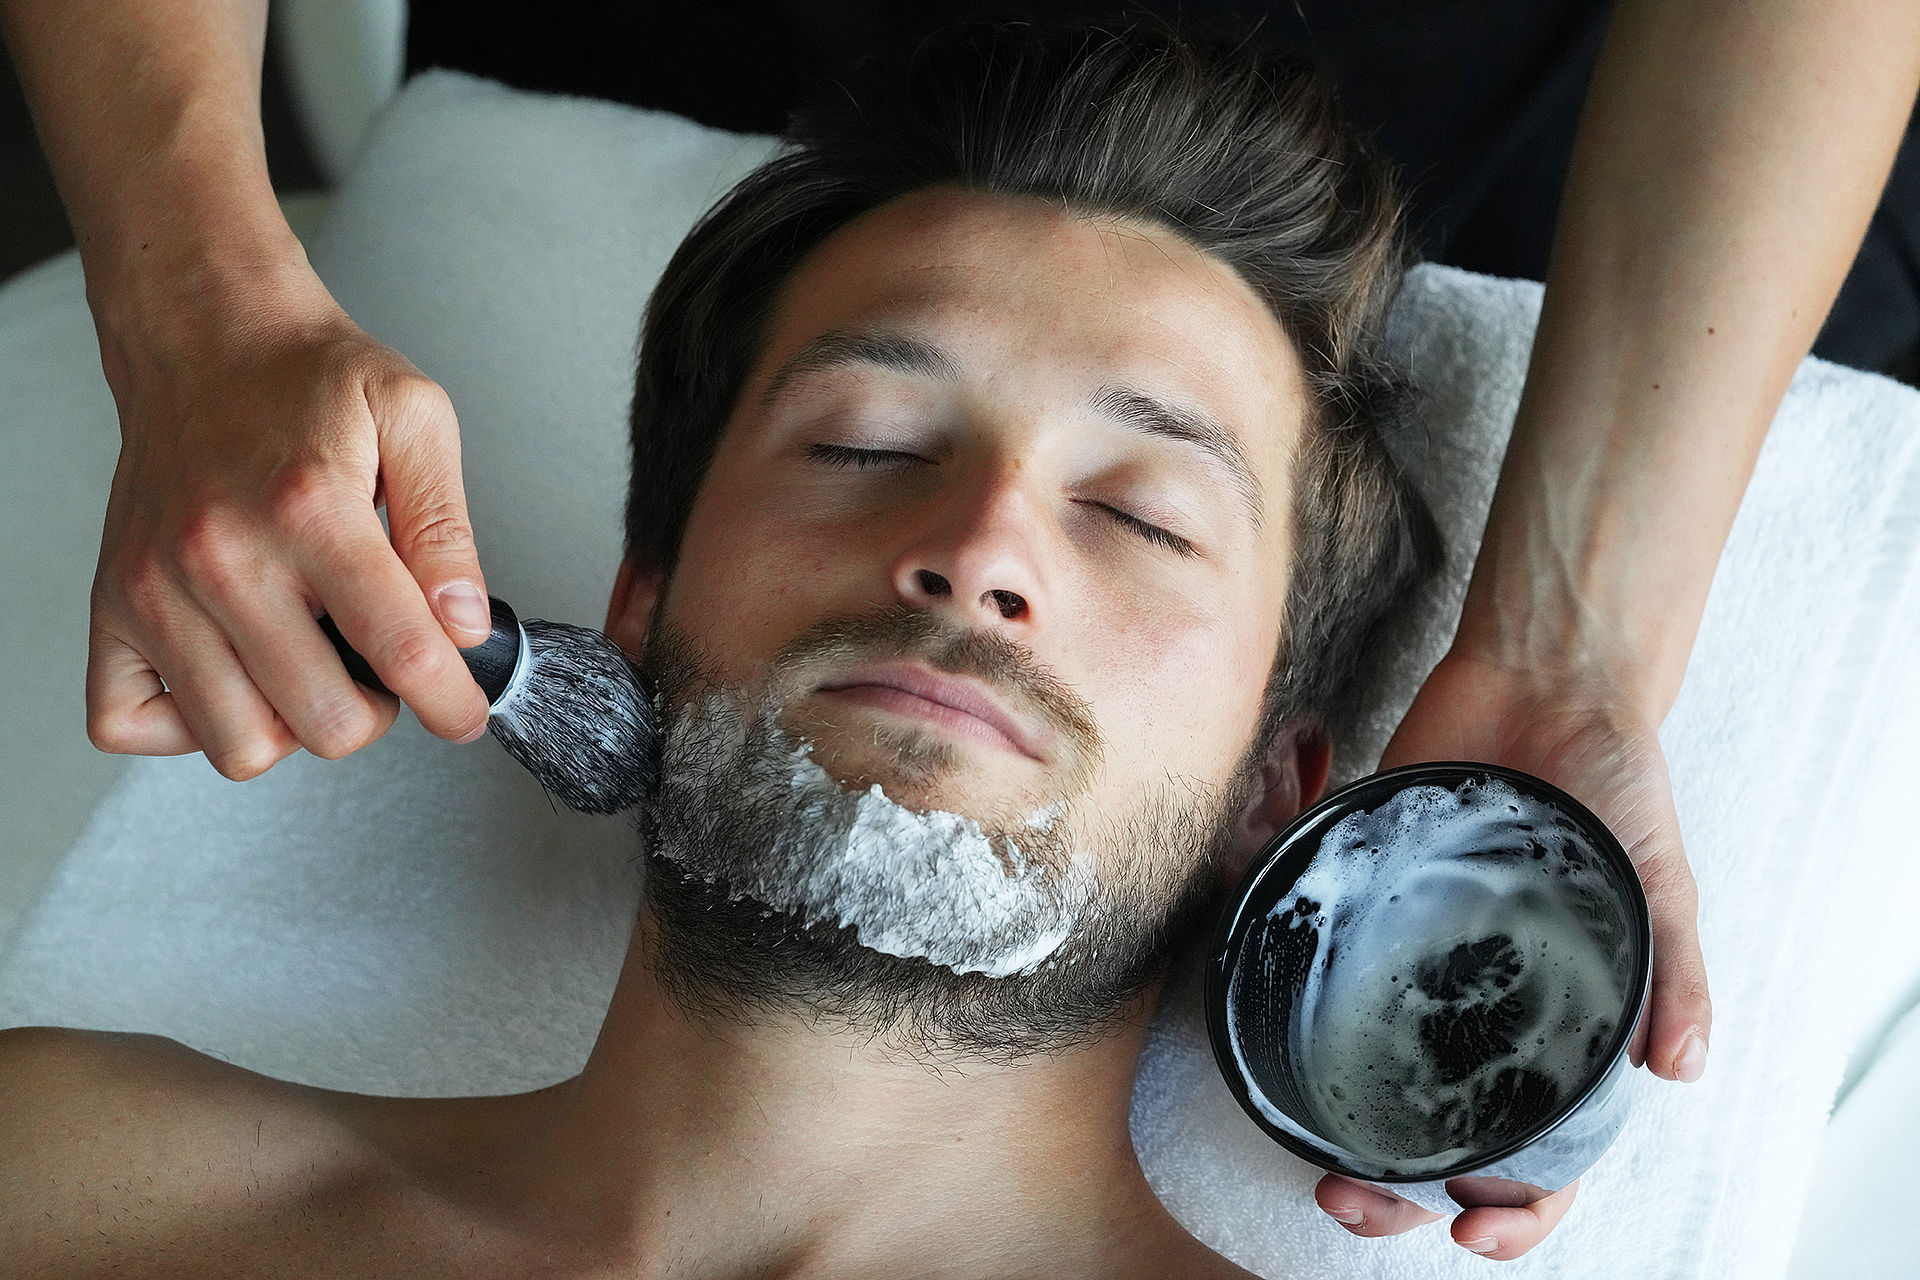 Man enjoys a facial shave